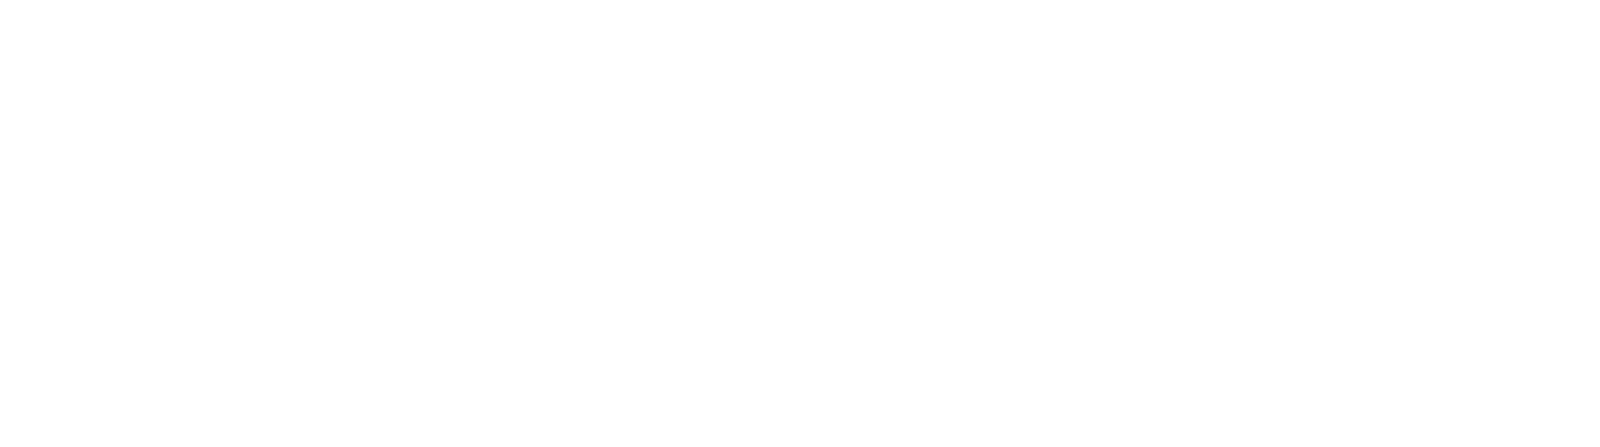 Gogoro logo grand pour les fonds sombres (PNG transparent)